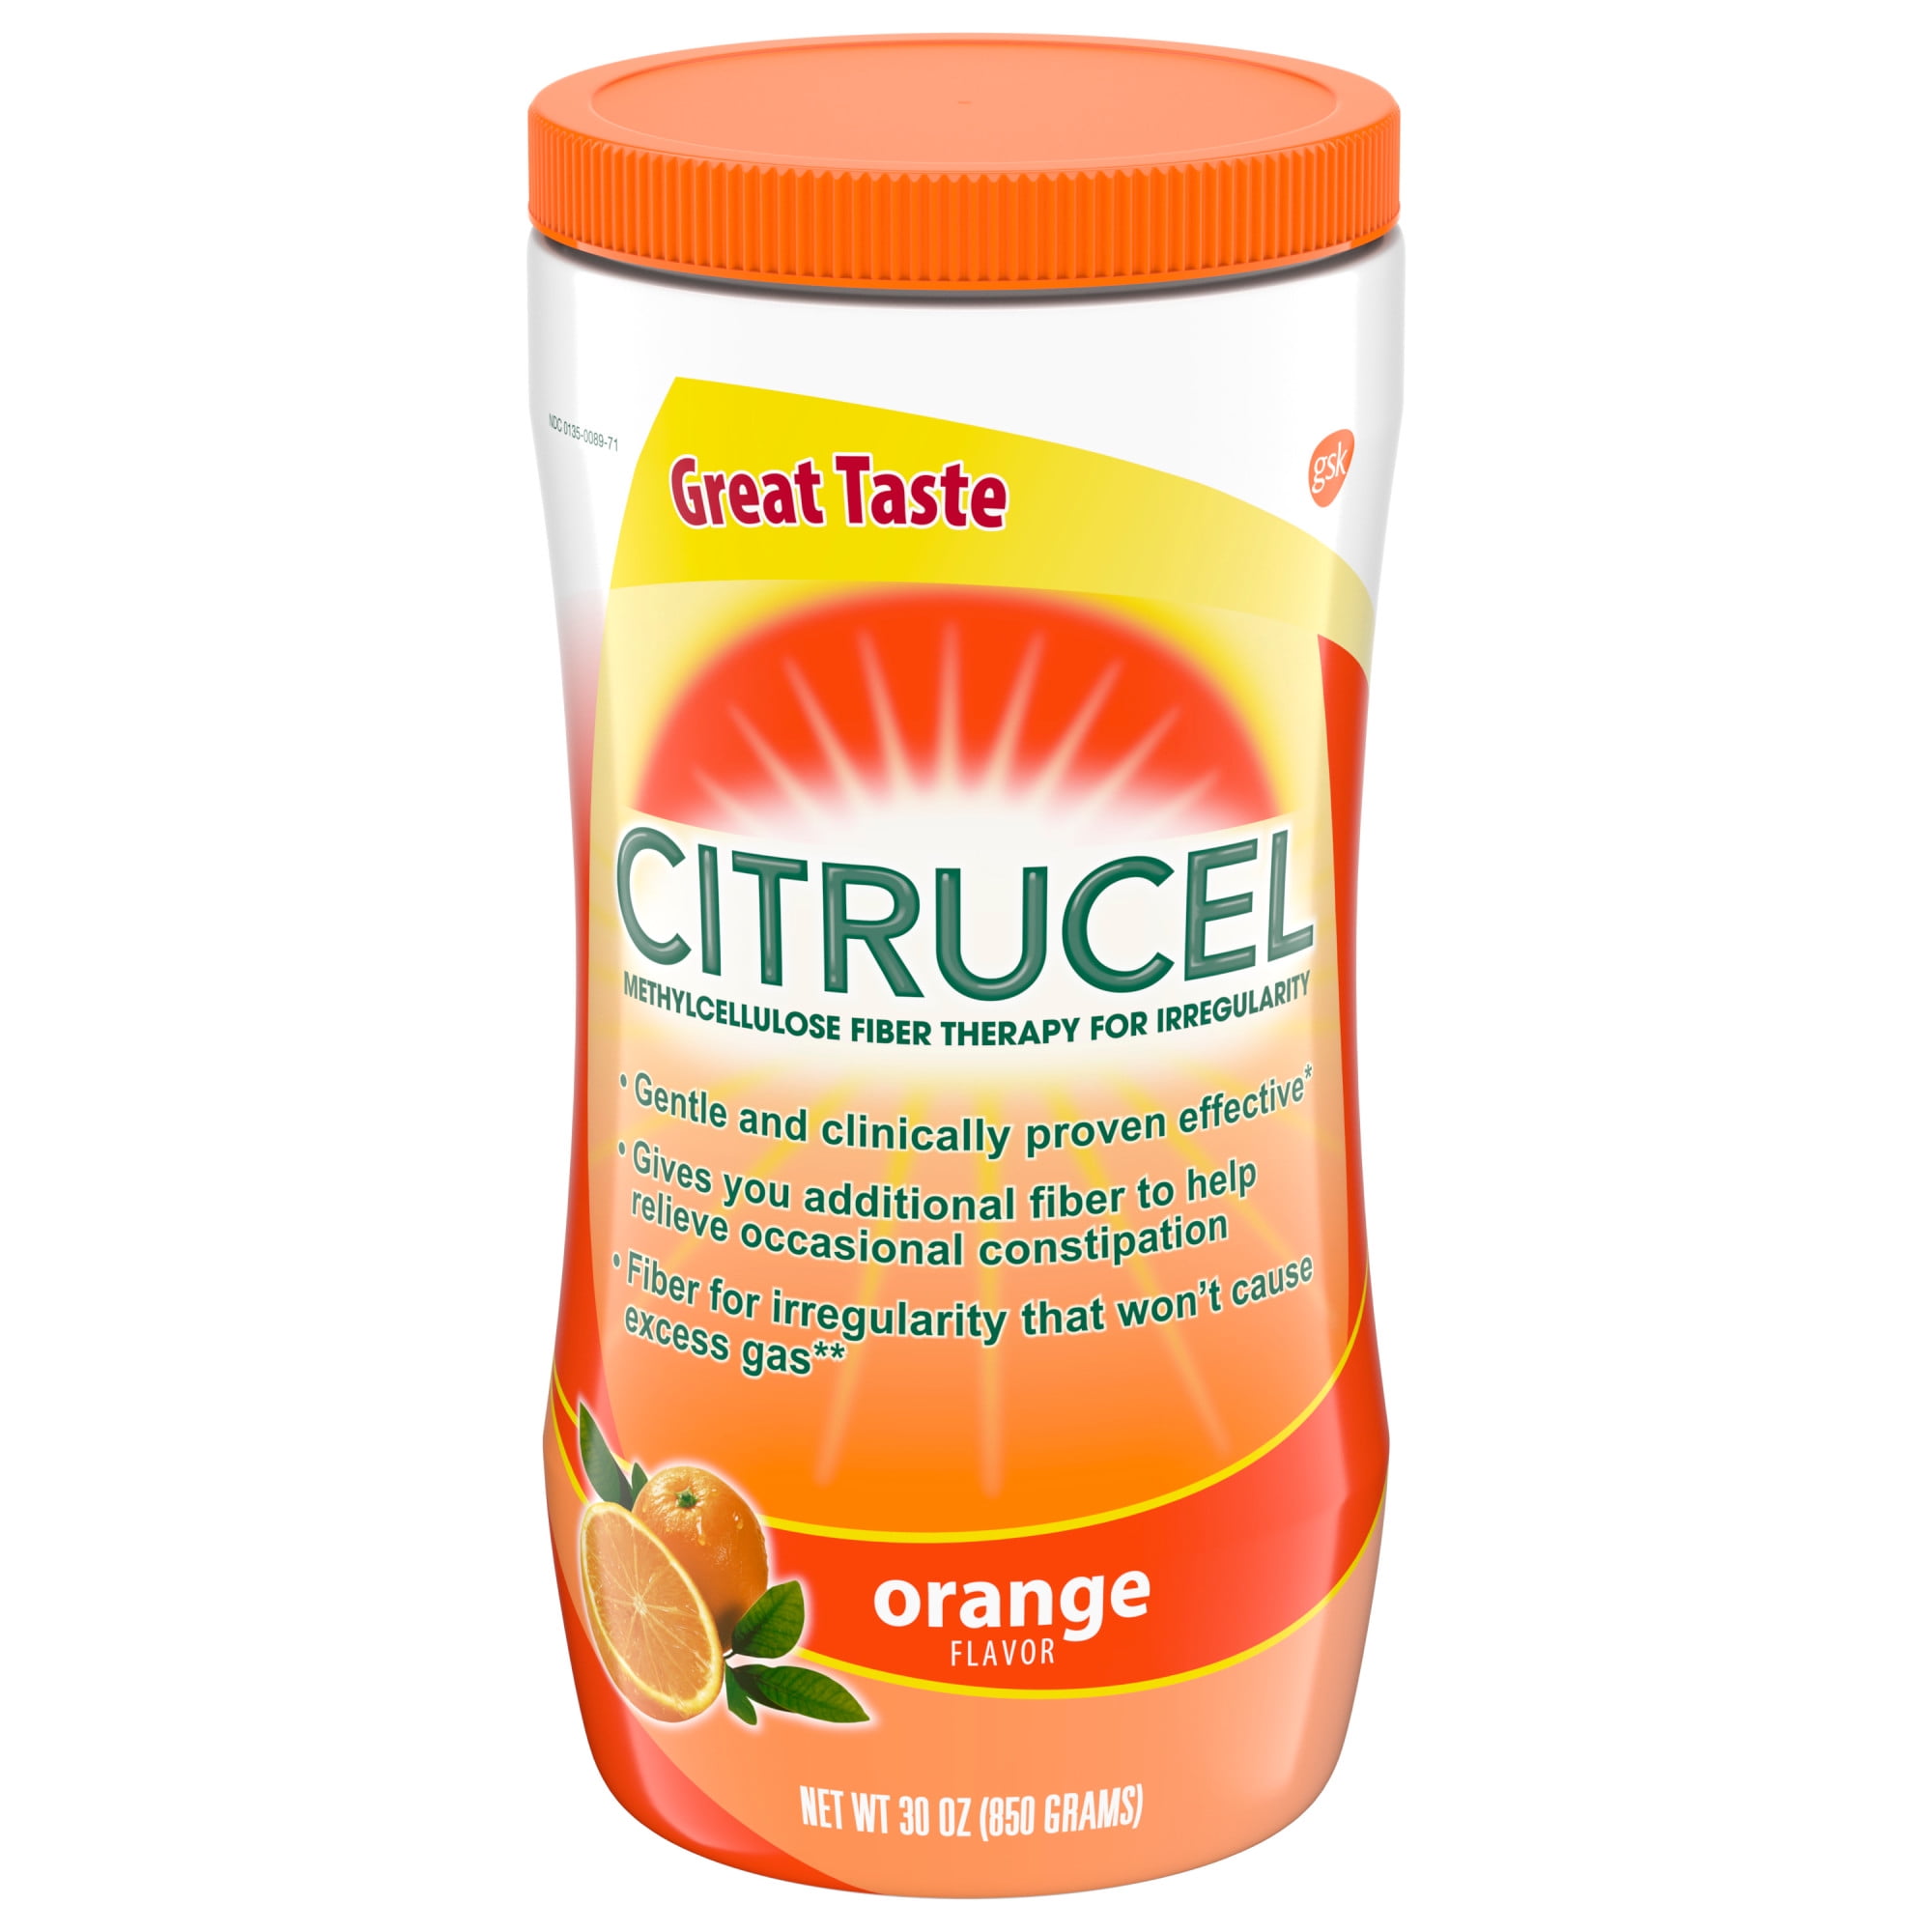 Citrucel Fiber Therapy Powder for Occasional Constipation Relief, Orange, 30 Oz